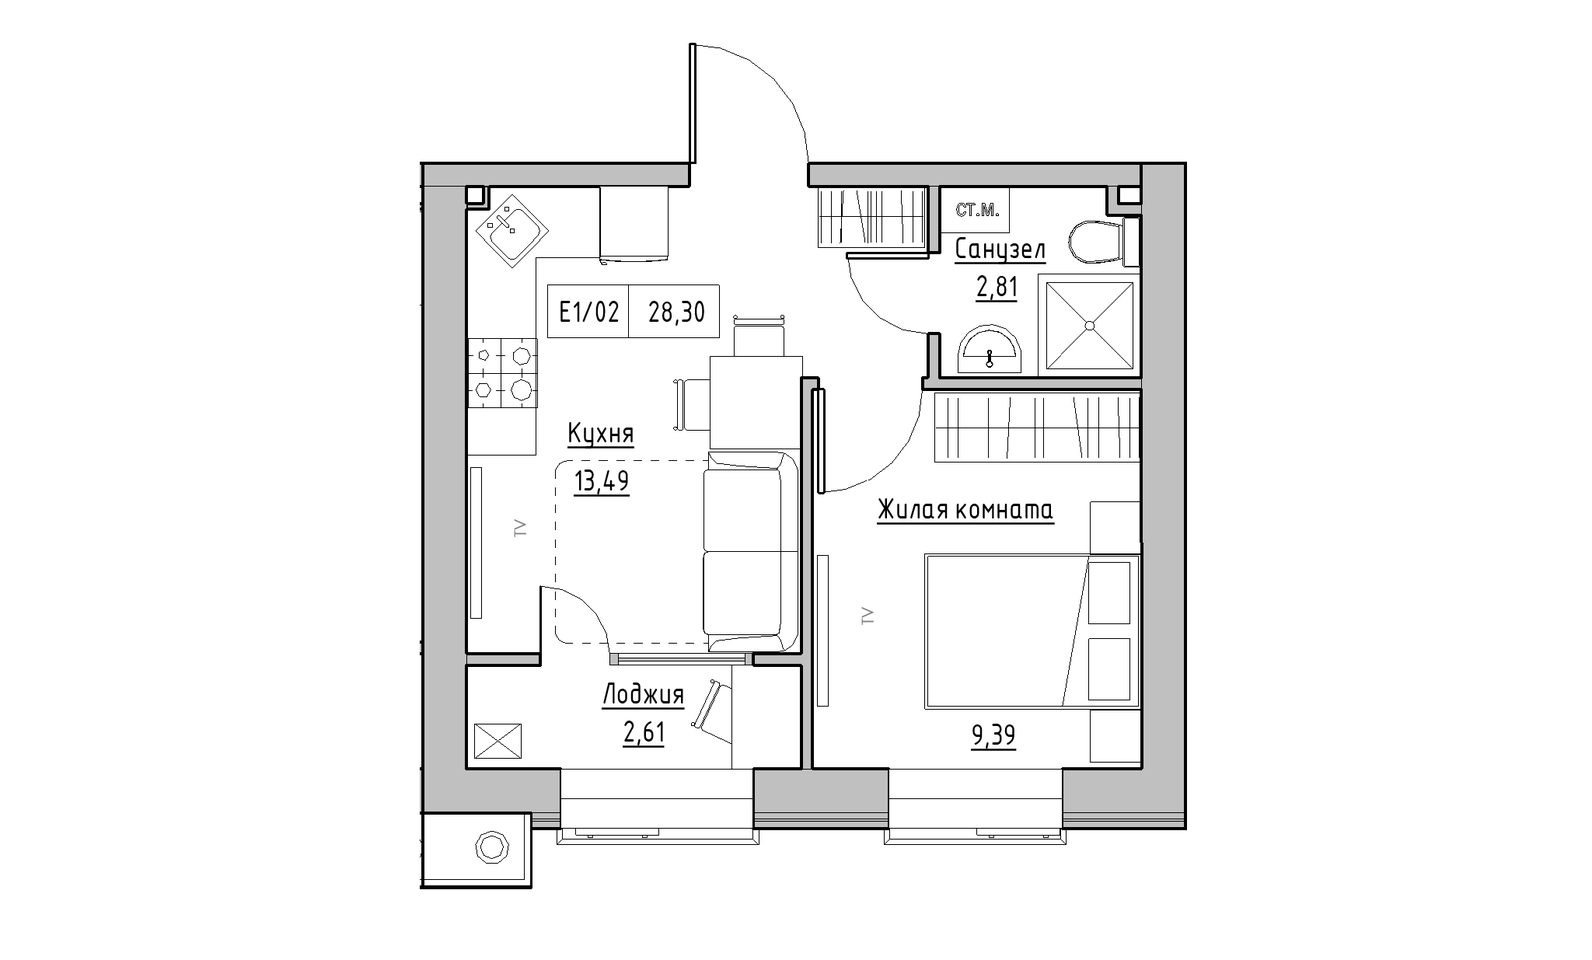 Planning 1-rm flats area 28.3m2, KS-014-01/0001.